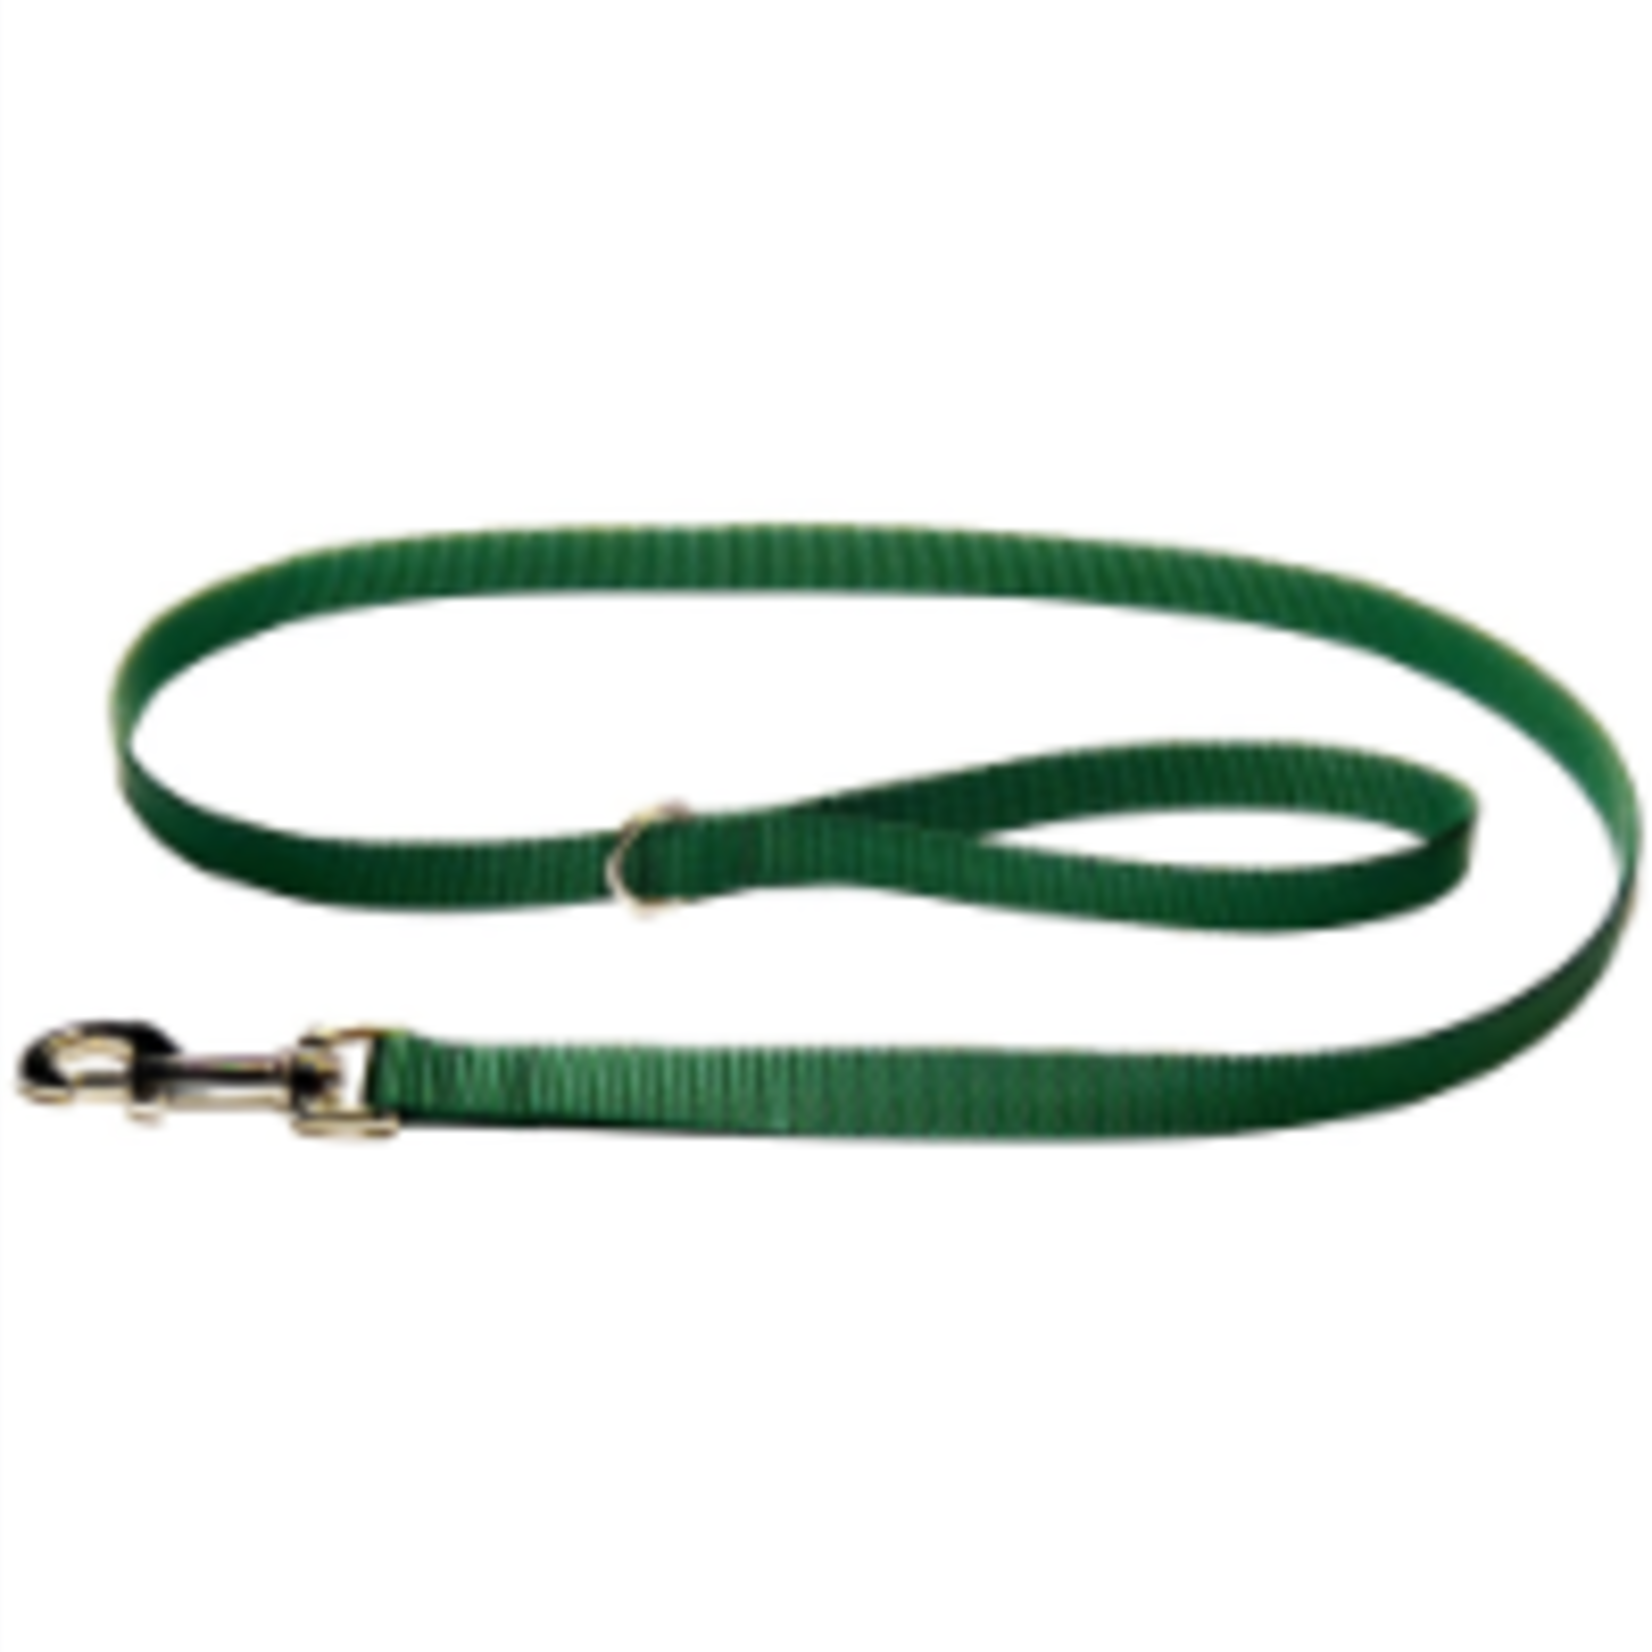 Hunter Brand Nylon leash - 3/4 in x 4 ft